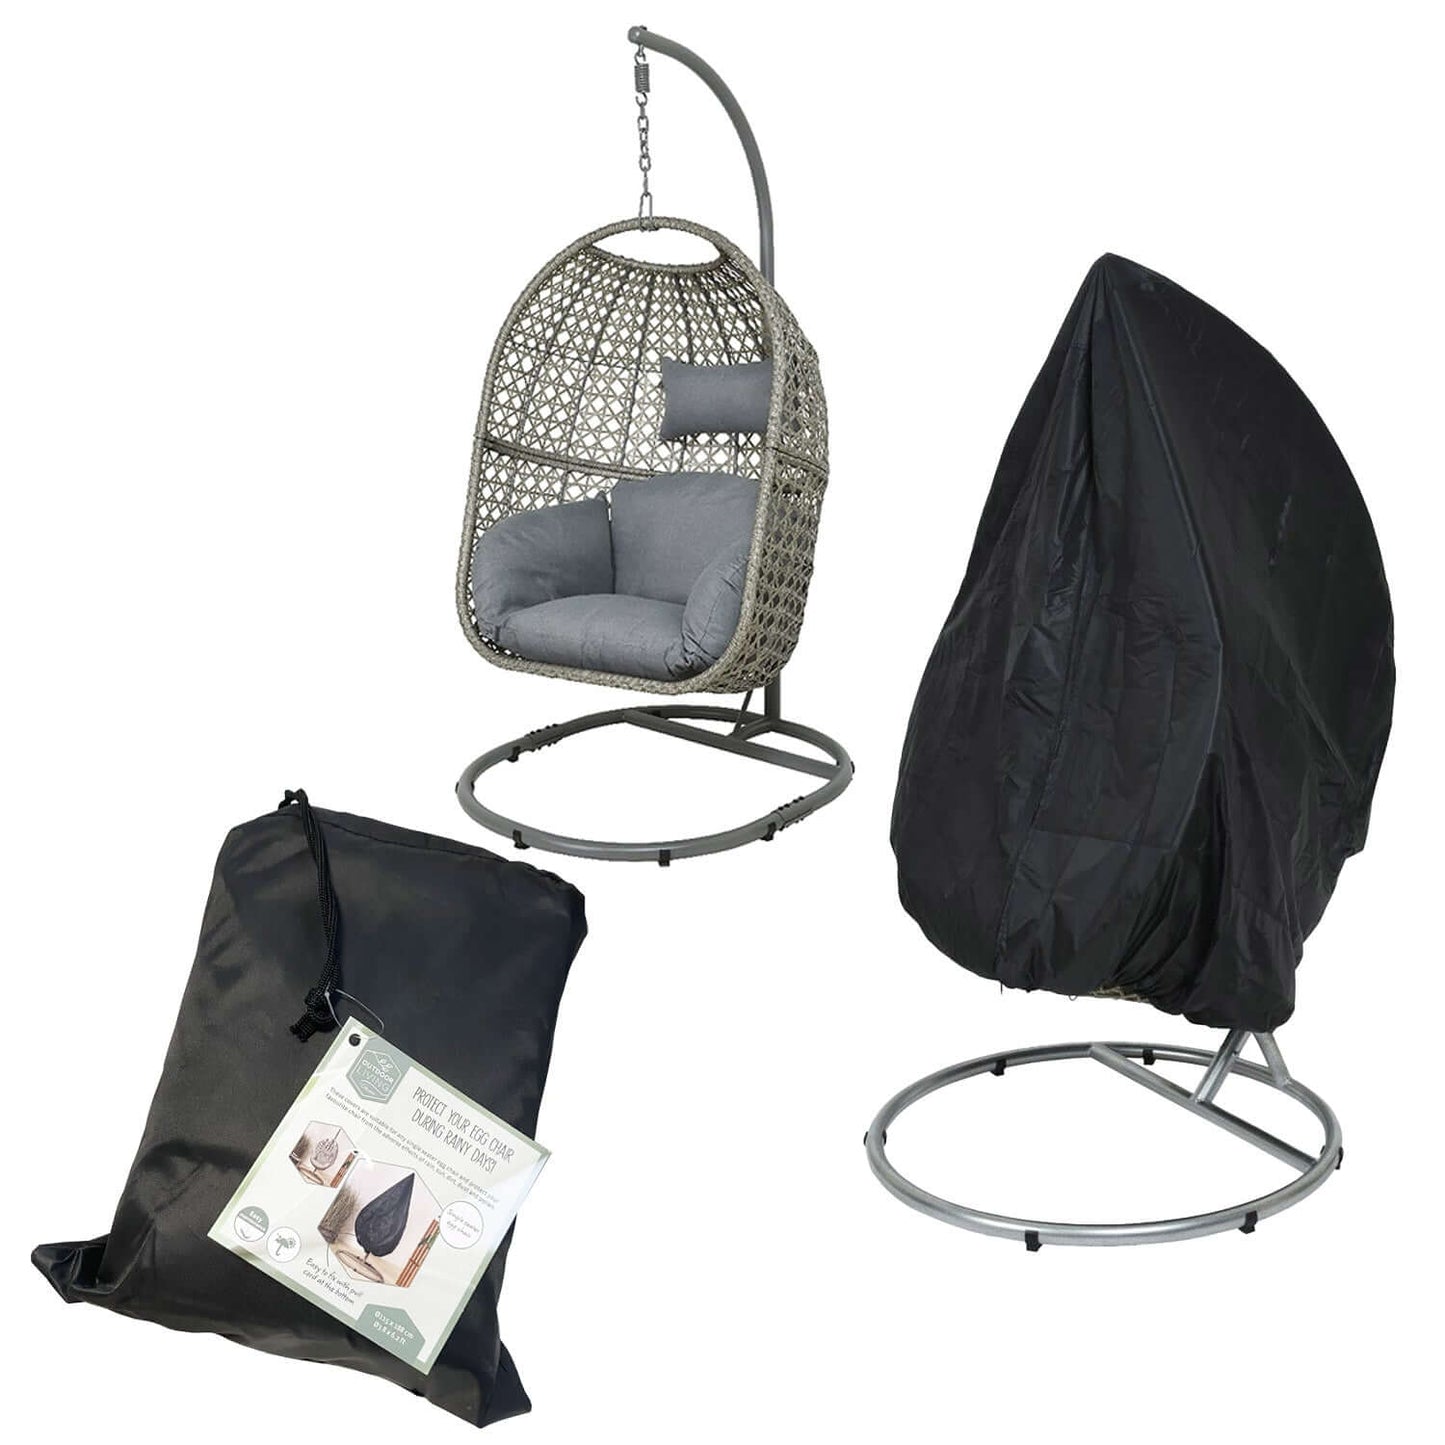 Black Outdoor Cover for Single Egg Chair - Garden Furniture Swing Frame Cover